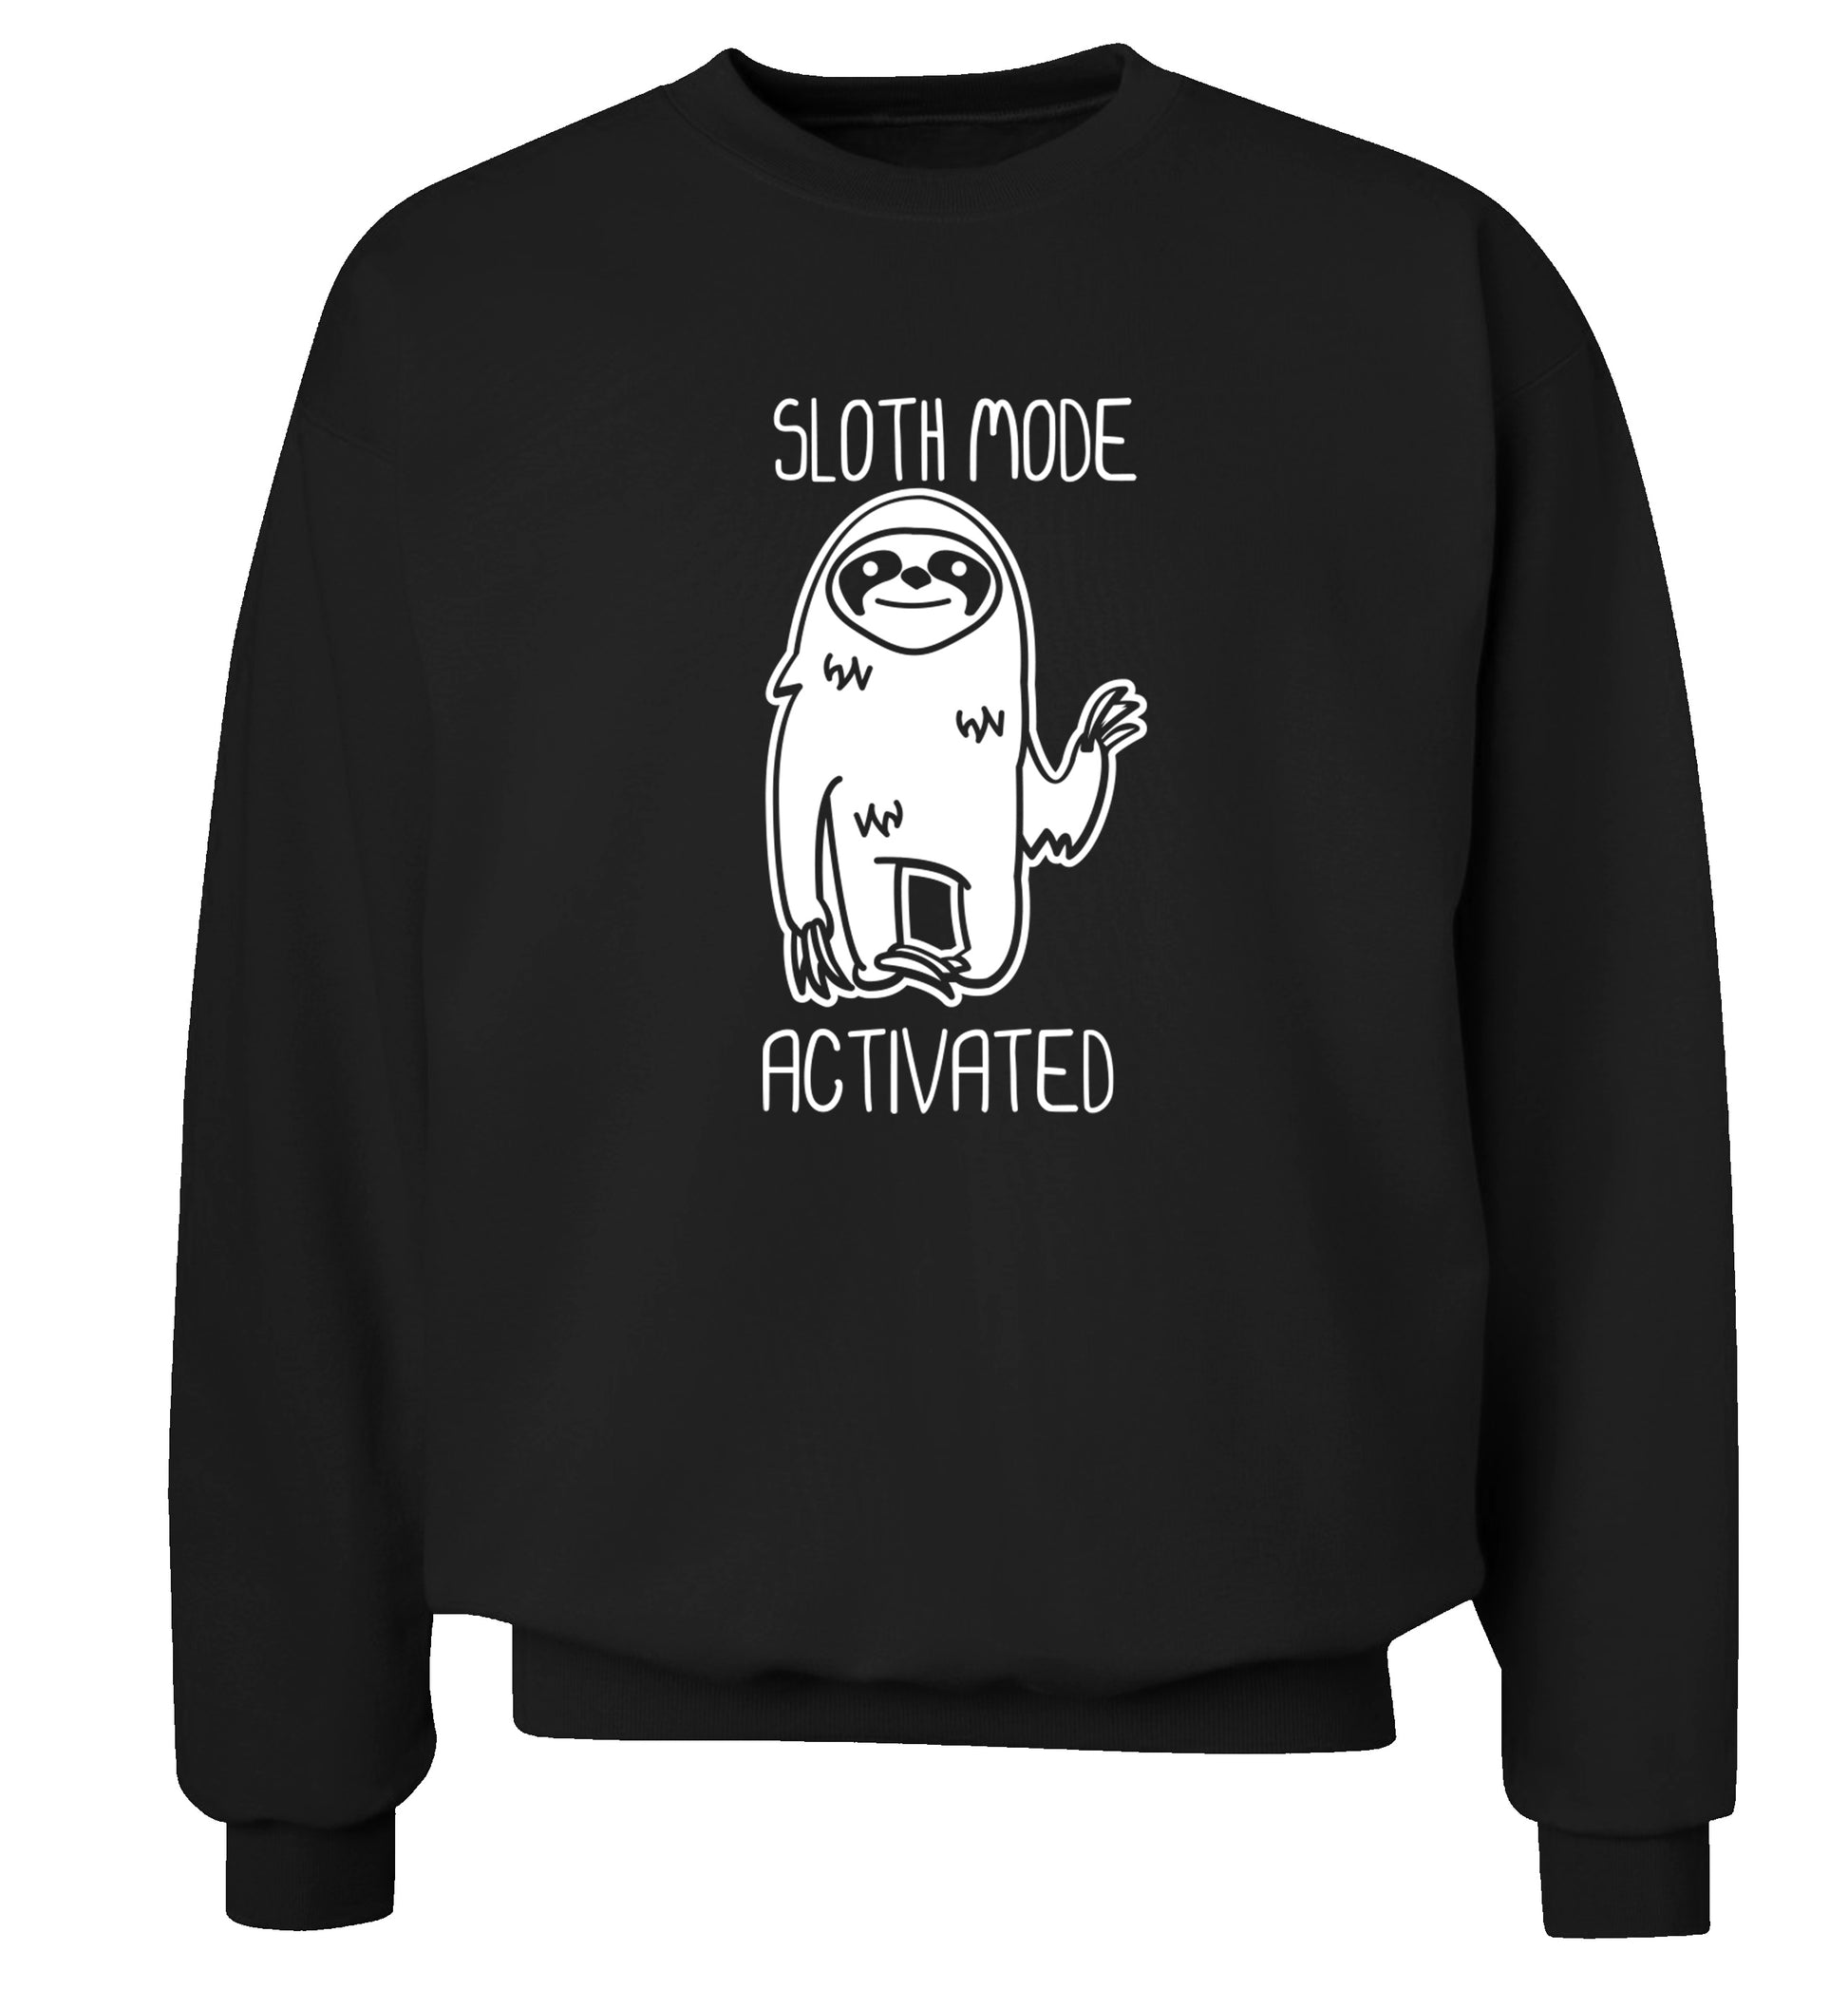 Sloth mode acitvated Adult's unisex black Sweater 2XL